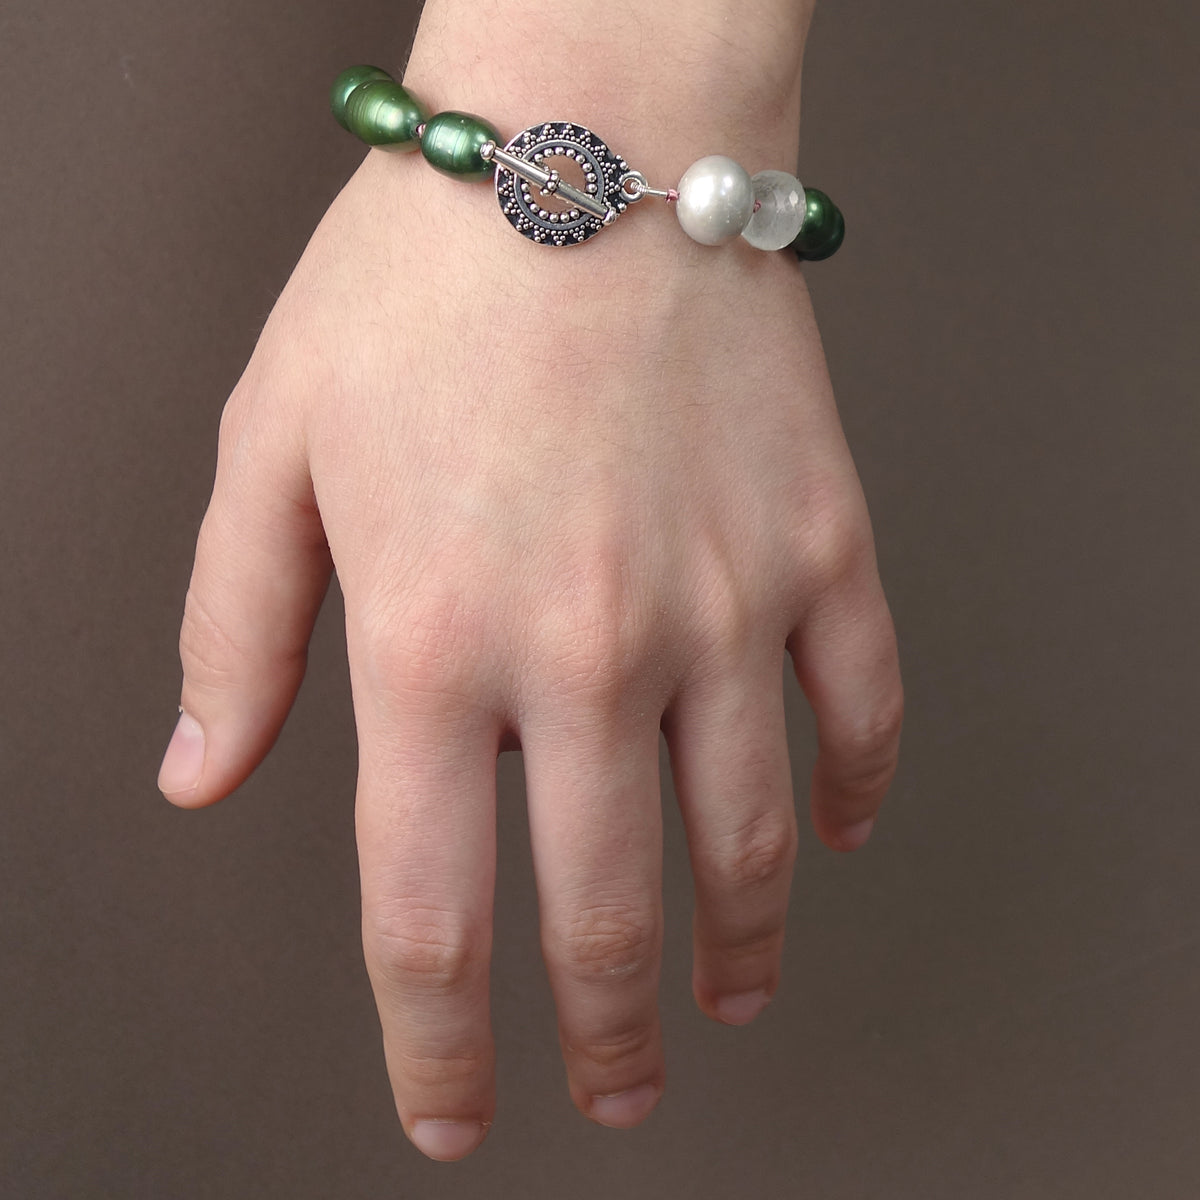 Emerald South Sea Pearl with Aquamarine bracelet